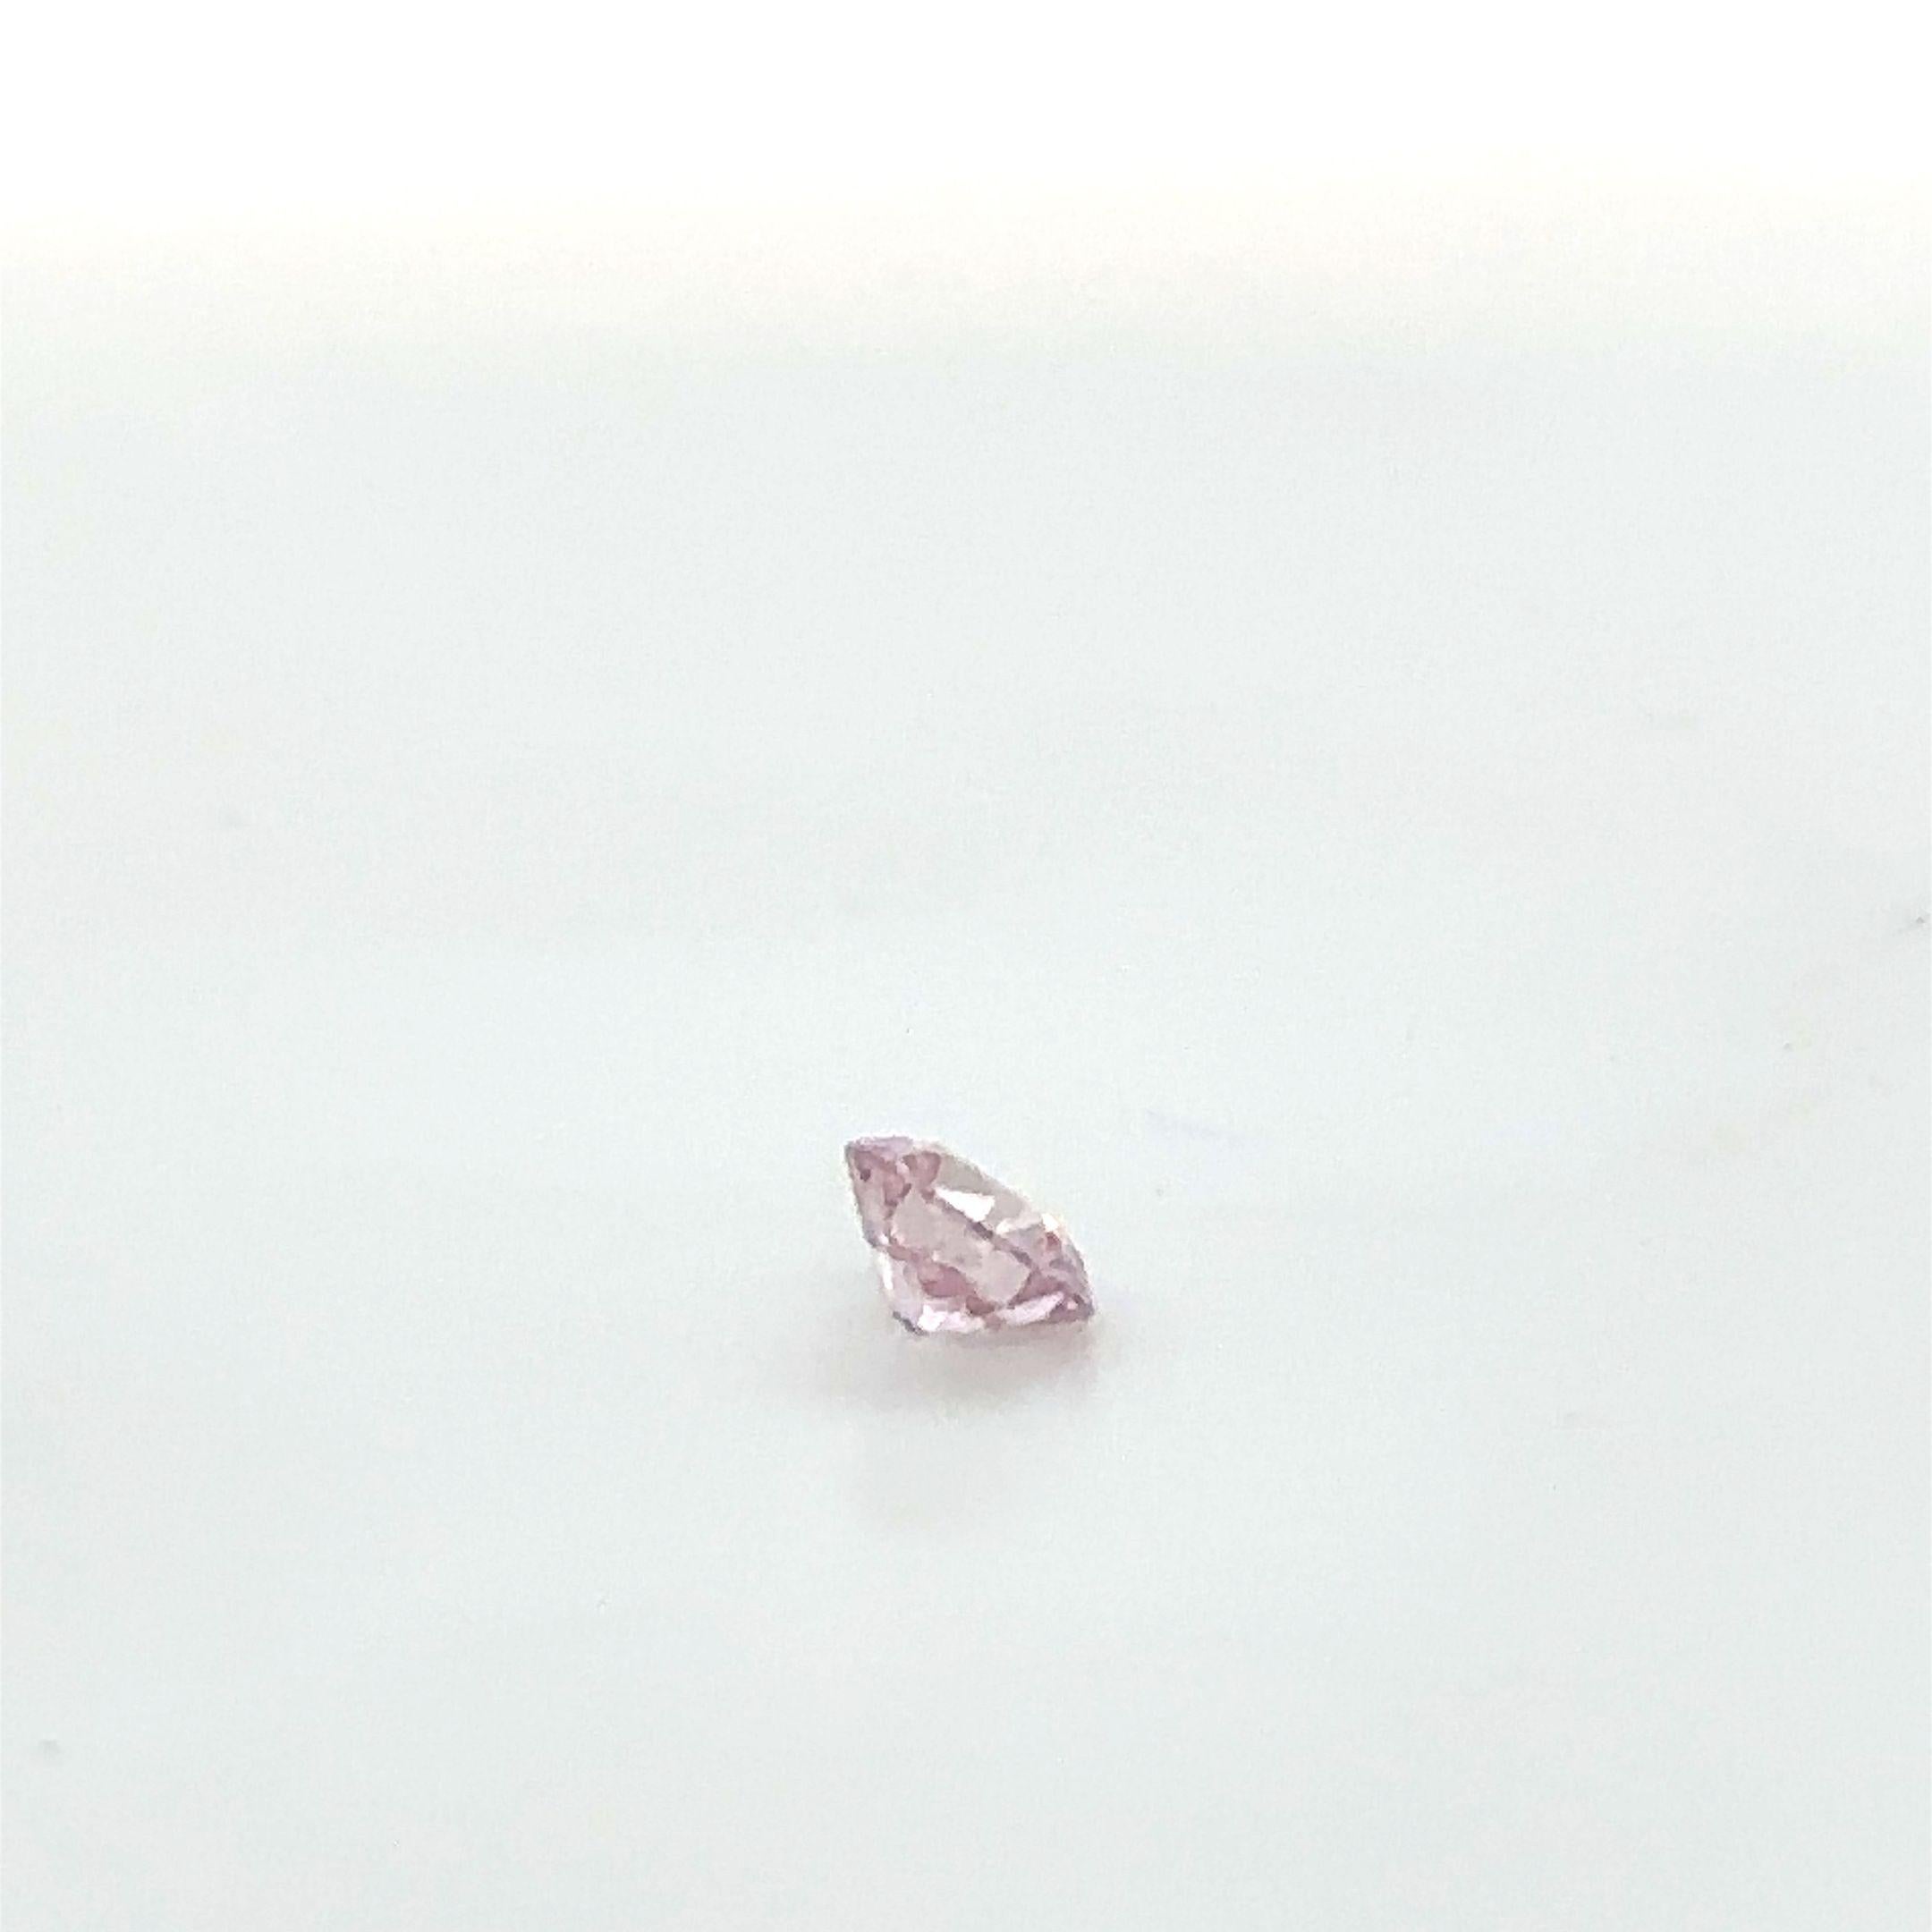 Brilliant Cut Bespoke Pink Argyle Diamond 0.25ct